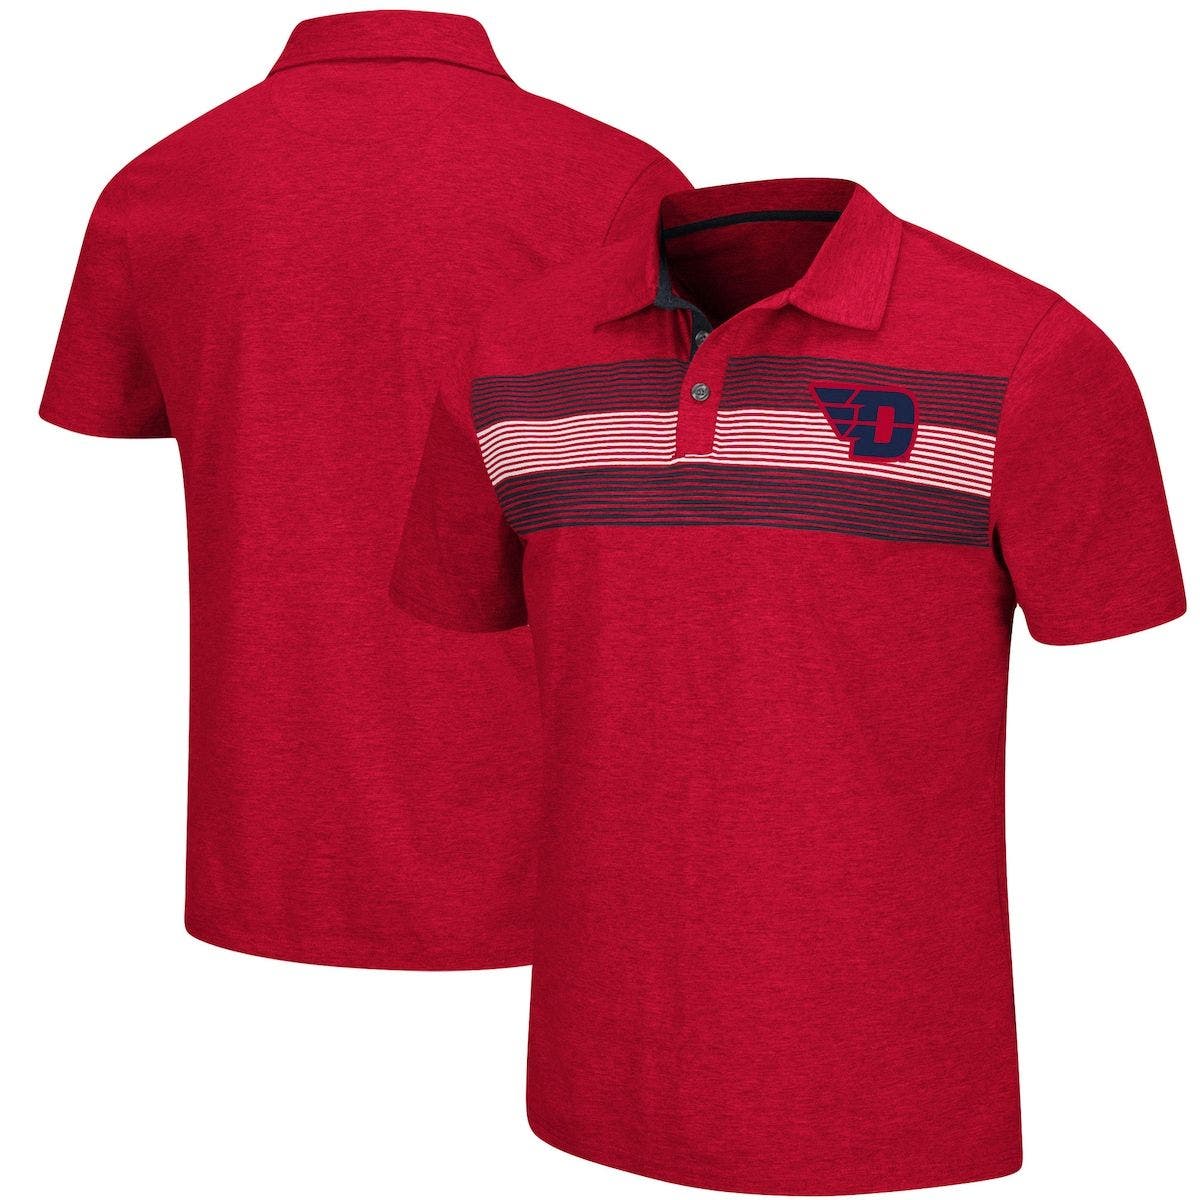 Colosseum Mens NCAA Heathered Trend-Setter Golf/Polo Shirt Villanova Wildcats-Heathered Blue, XX-Large 